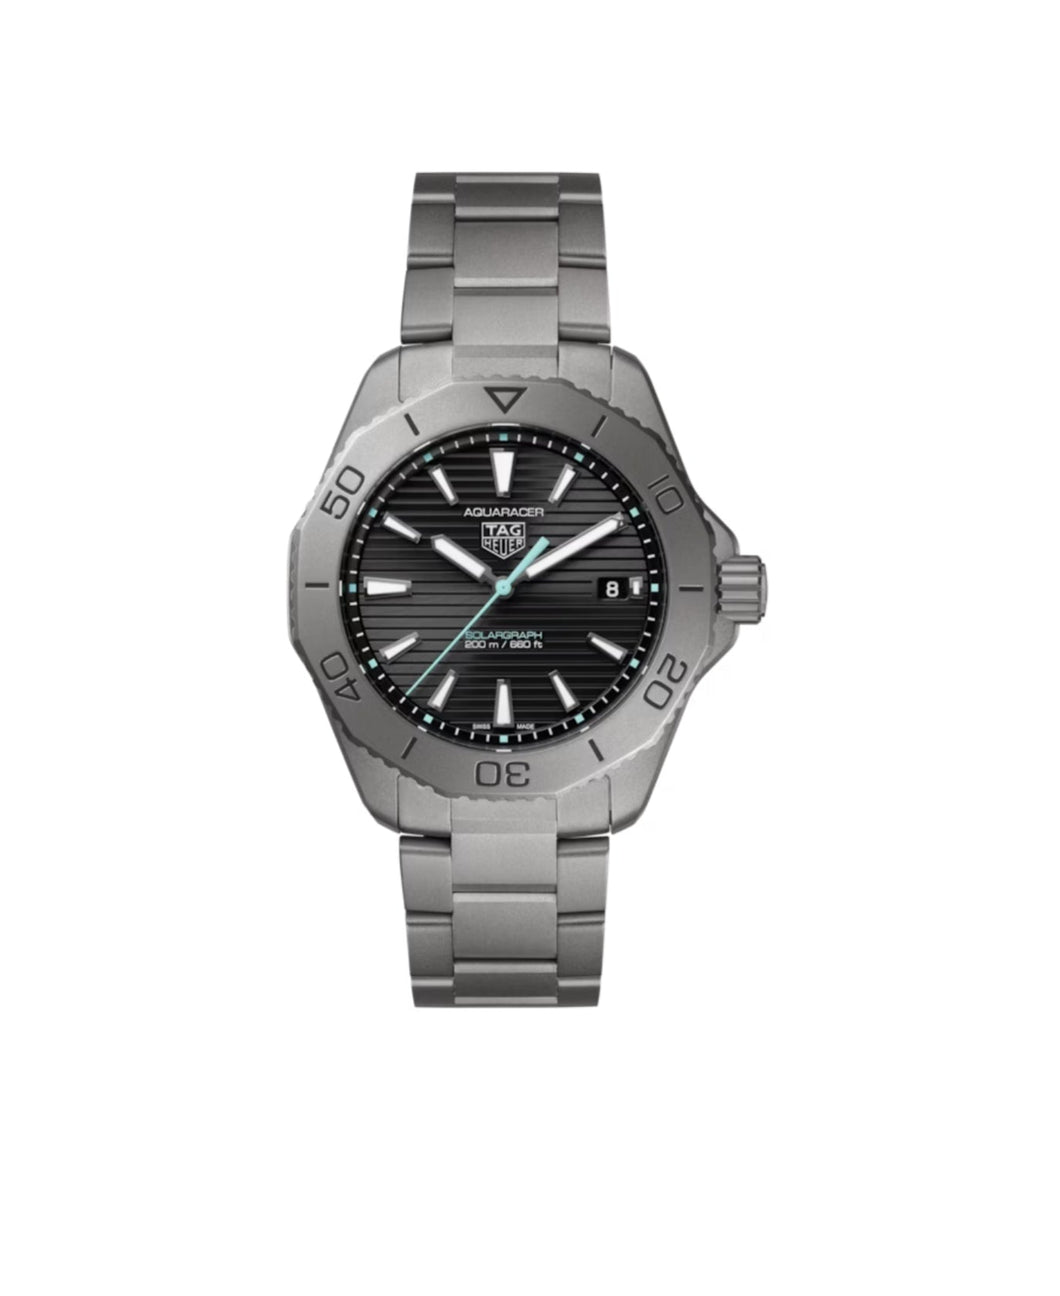 TAG HEUER-AQUARACER
PROFESSIONAL 200 SOLARGRAPH
Quartz Watch, 40 mm, Titanium
WBP1180.BF0000